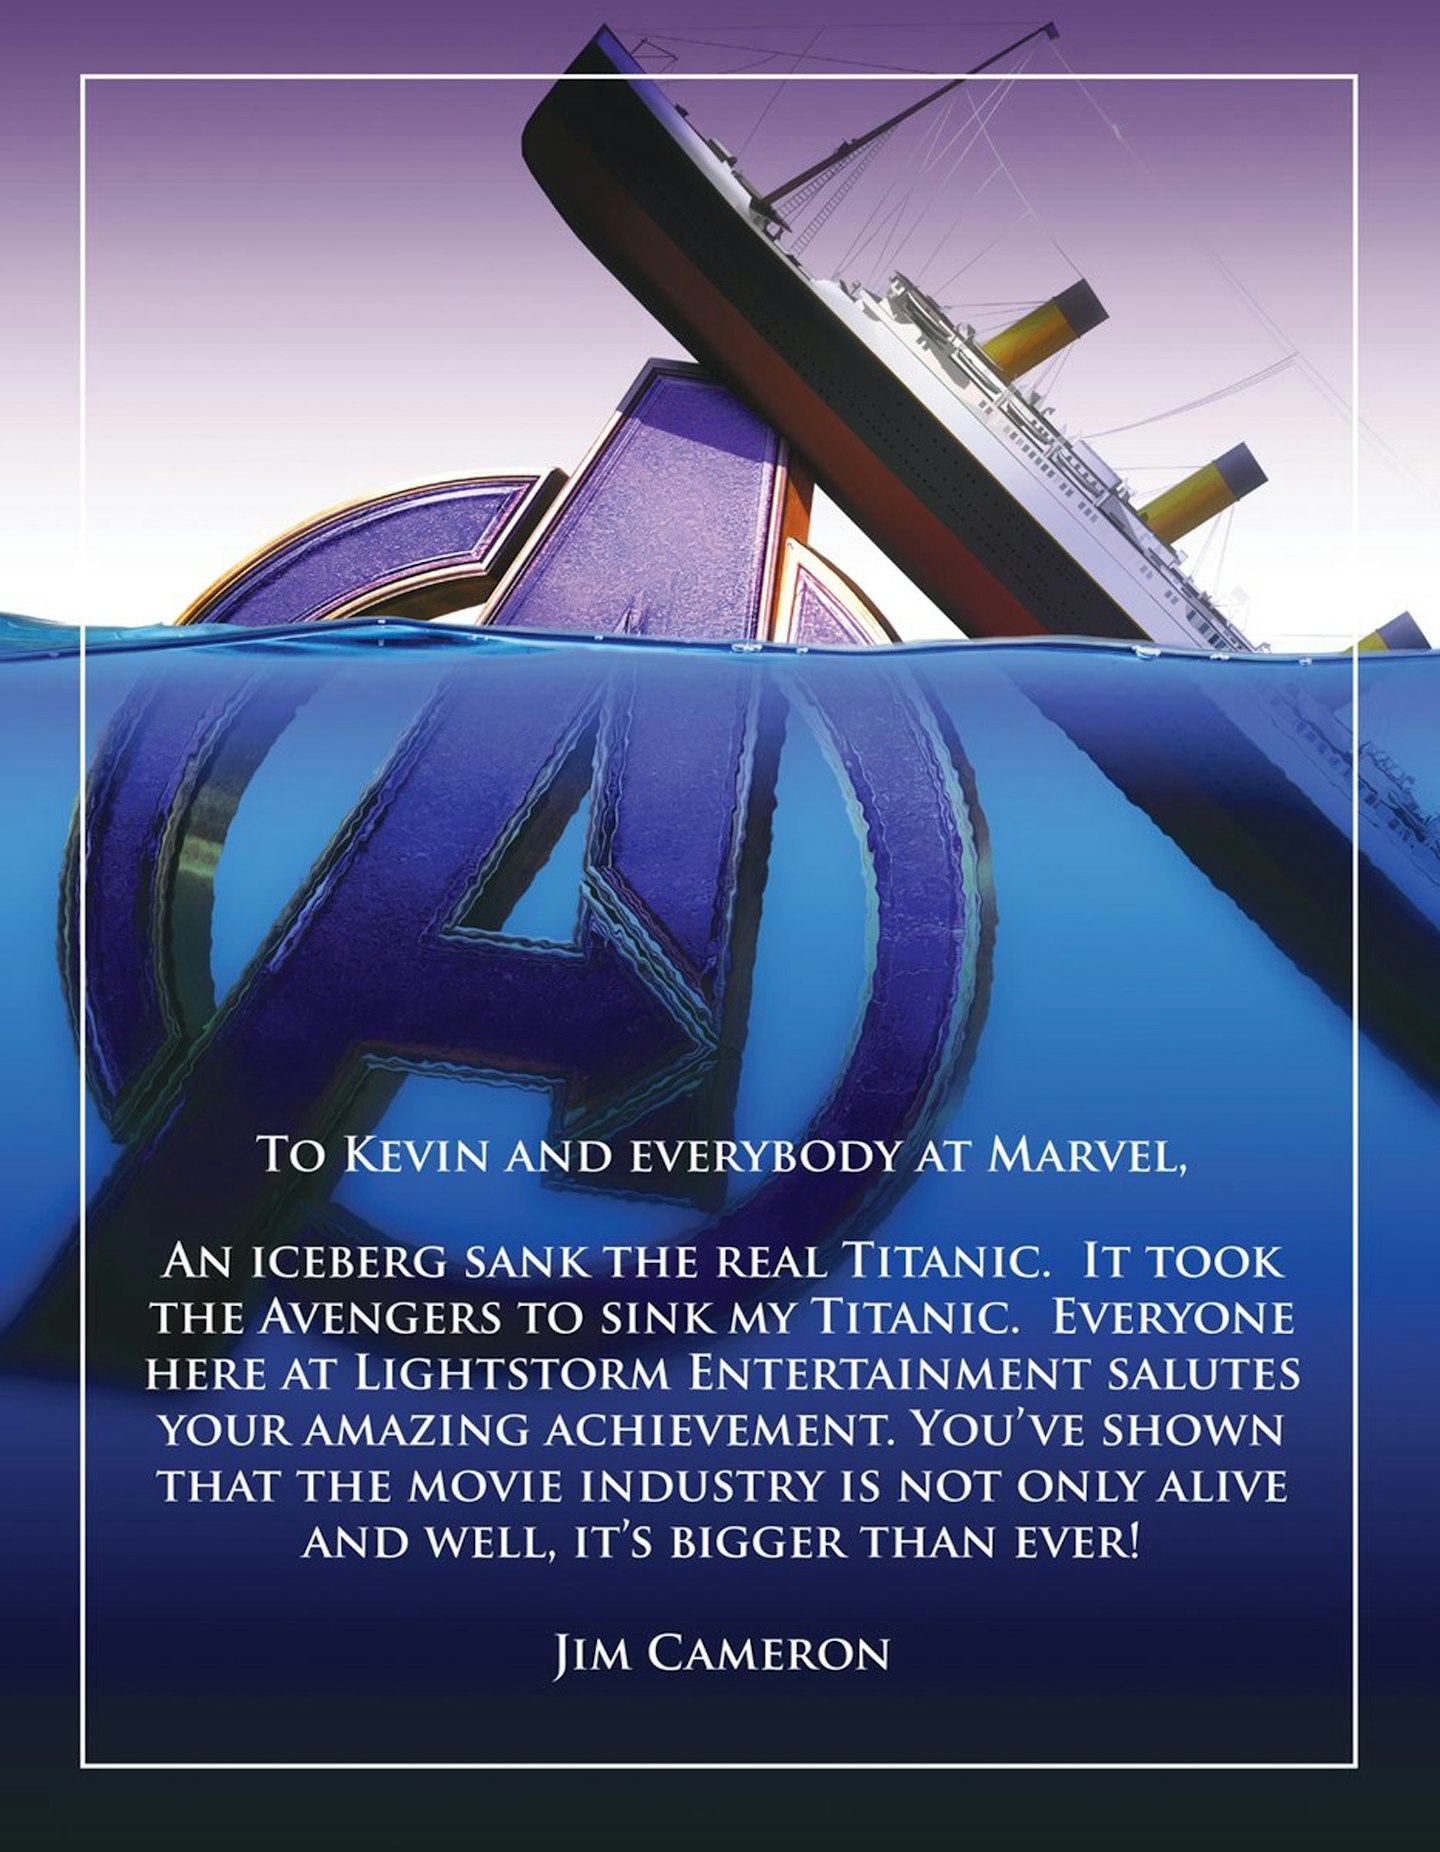 Avengers Endgame / Titanic / James Cameron